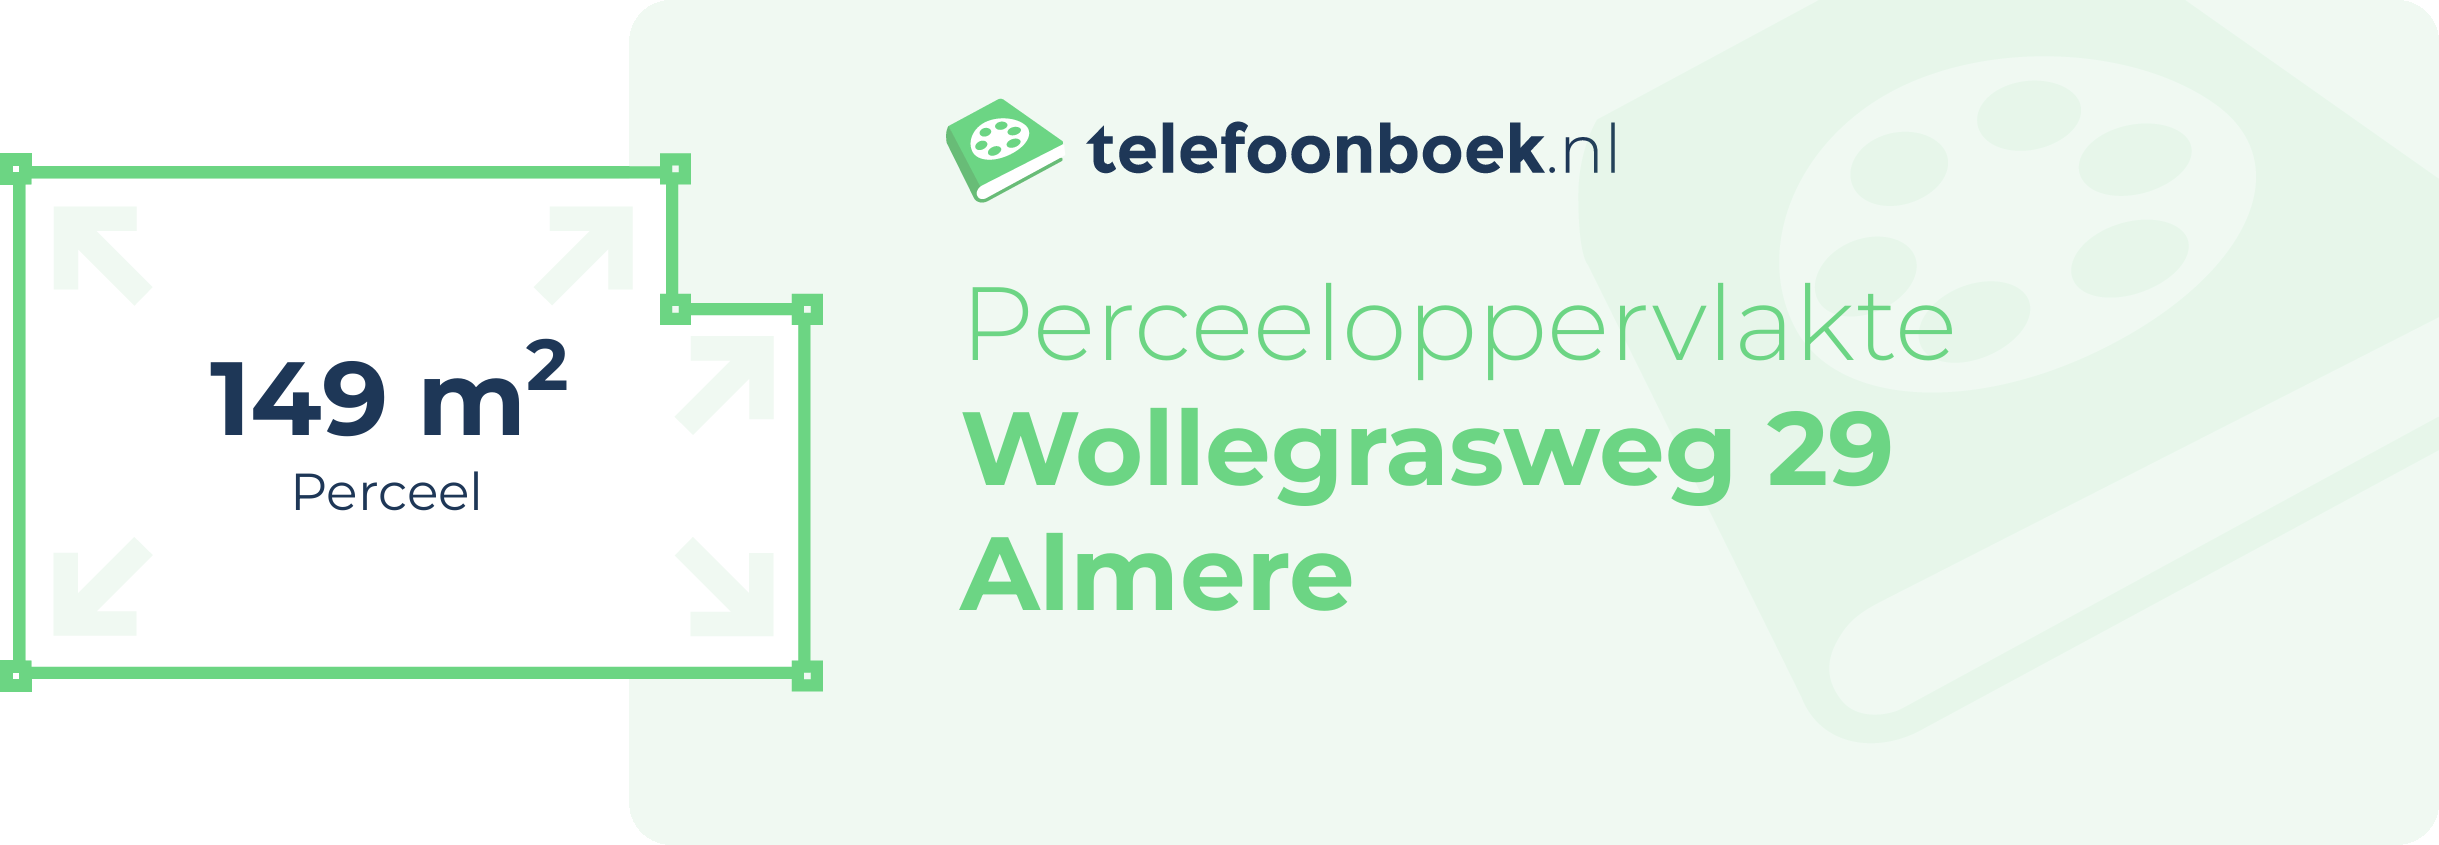 Perceeloppervlakte Wollegrasweg 29 Almere